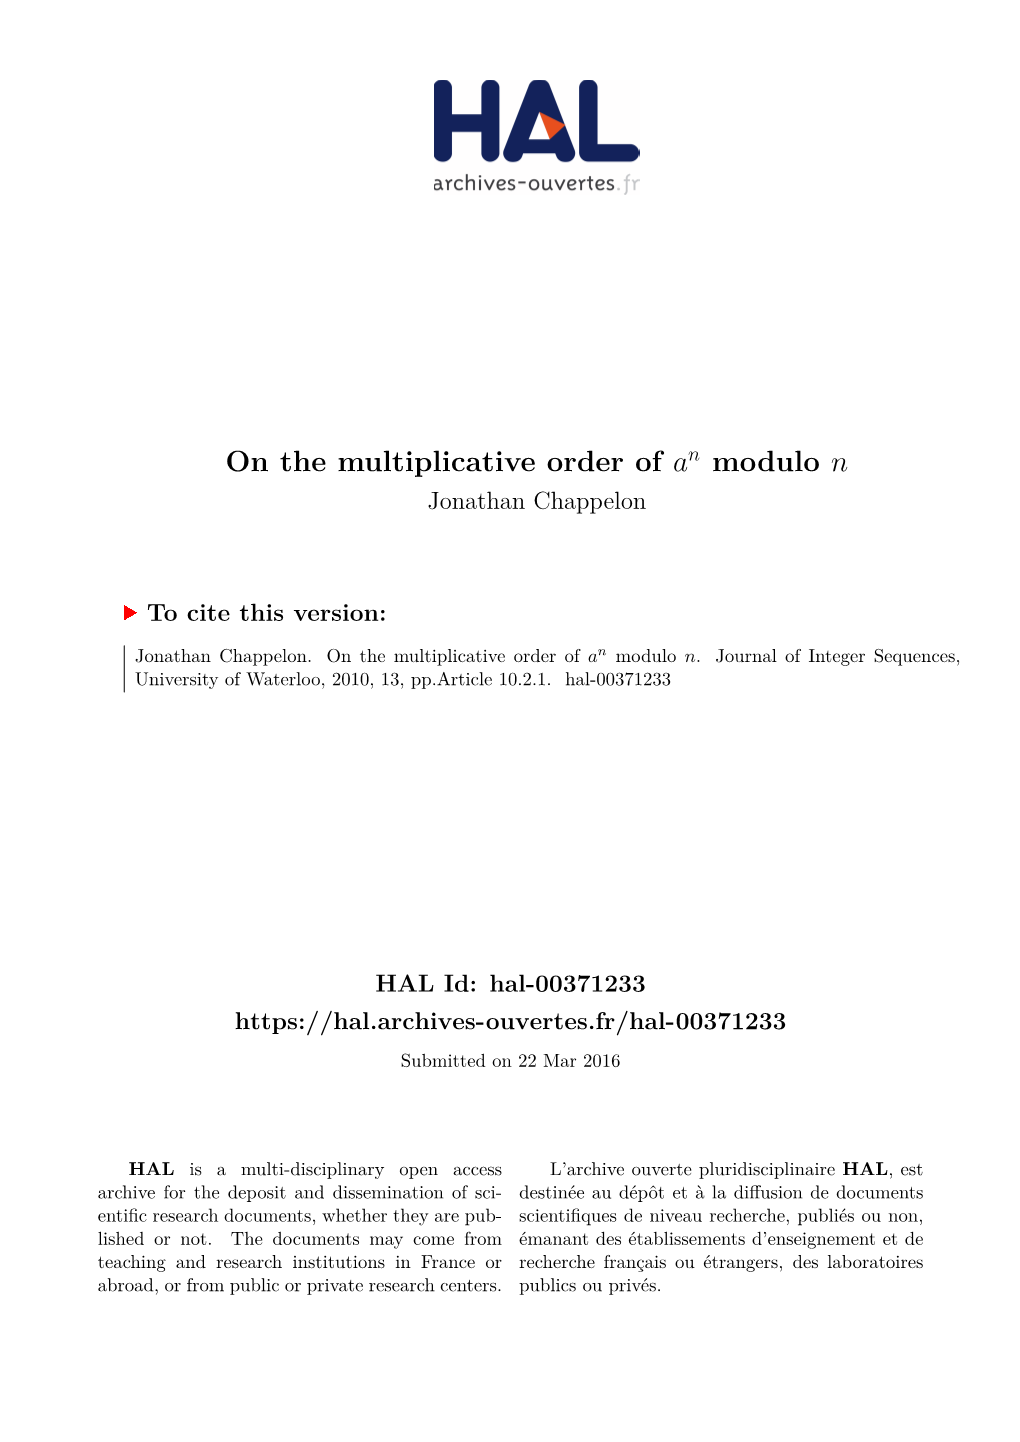 On the Multiplicative Order of an Modulo N Jonathan Chappelon